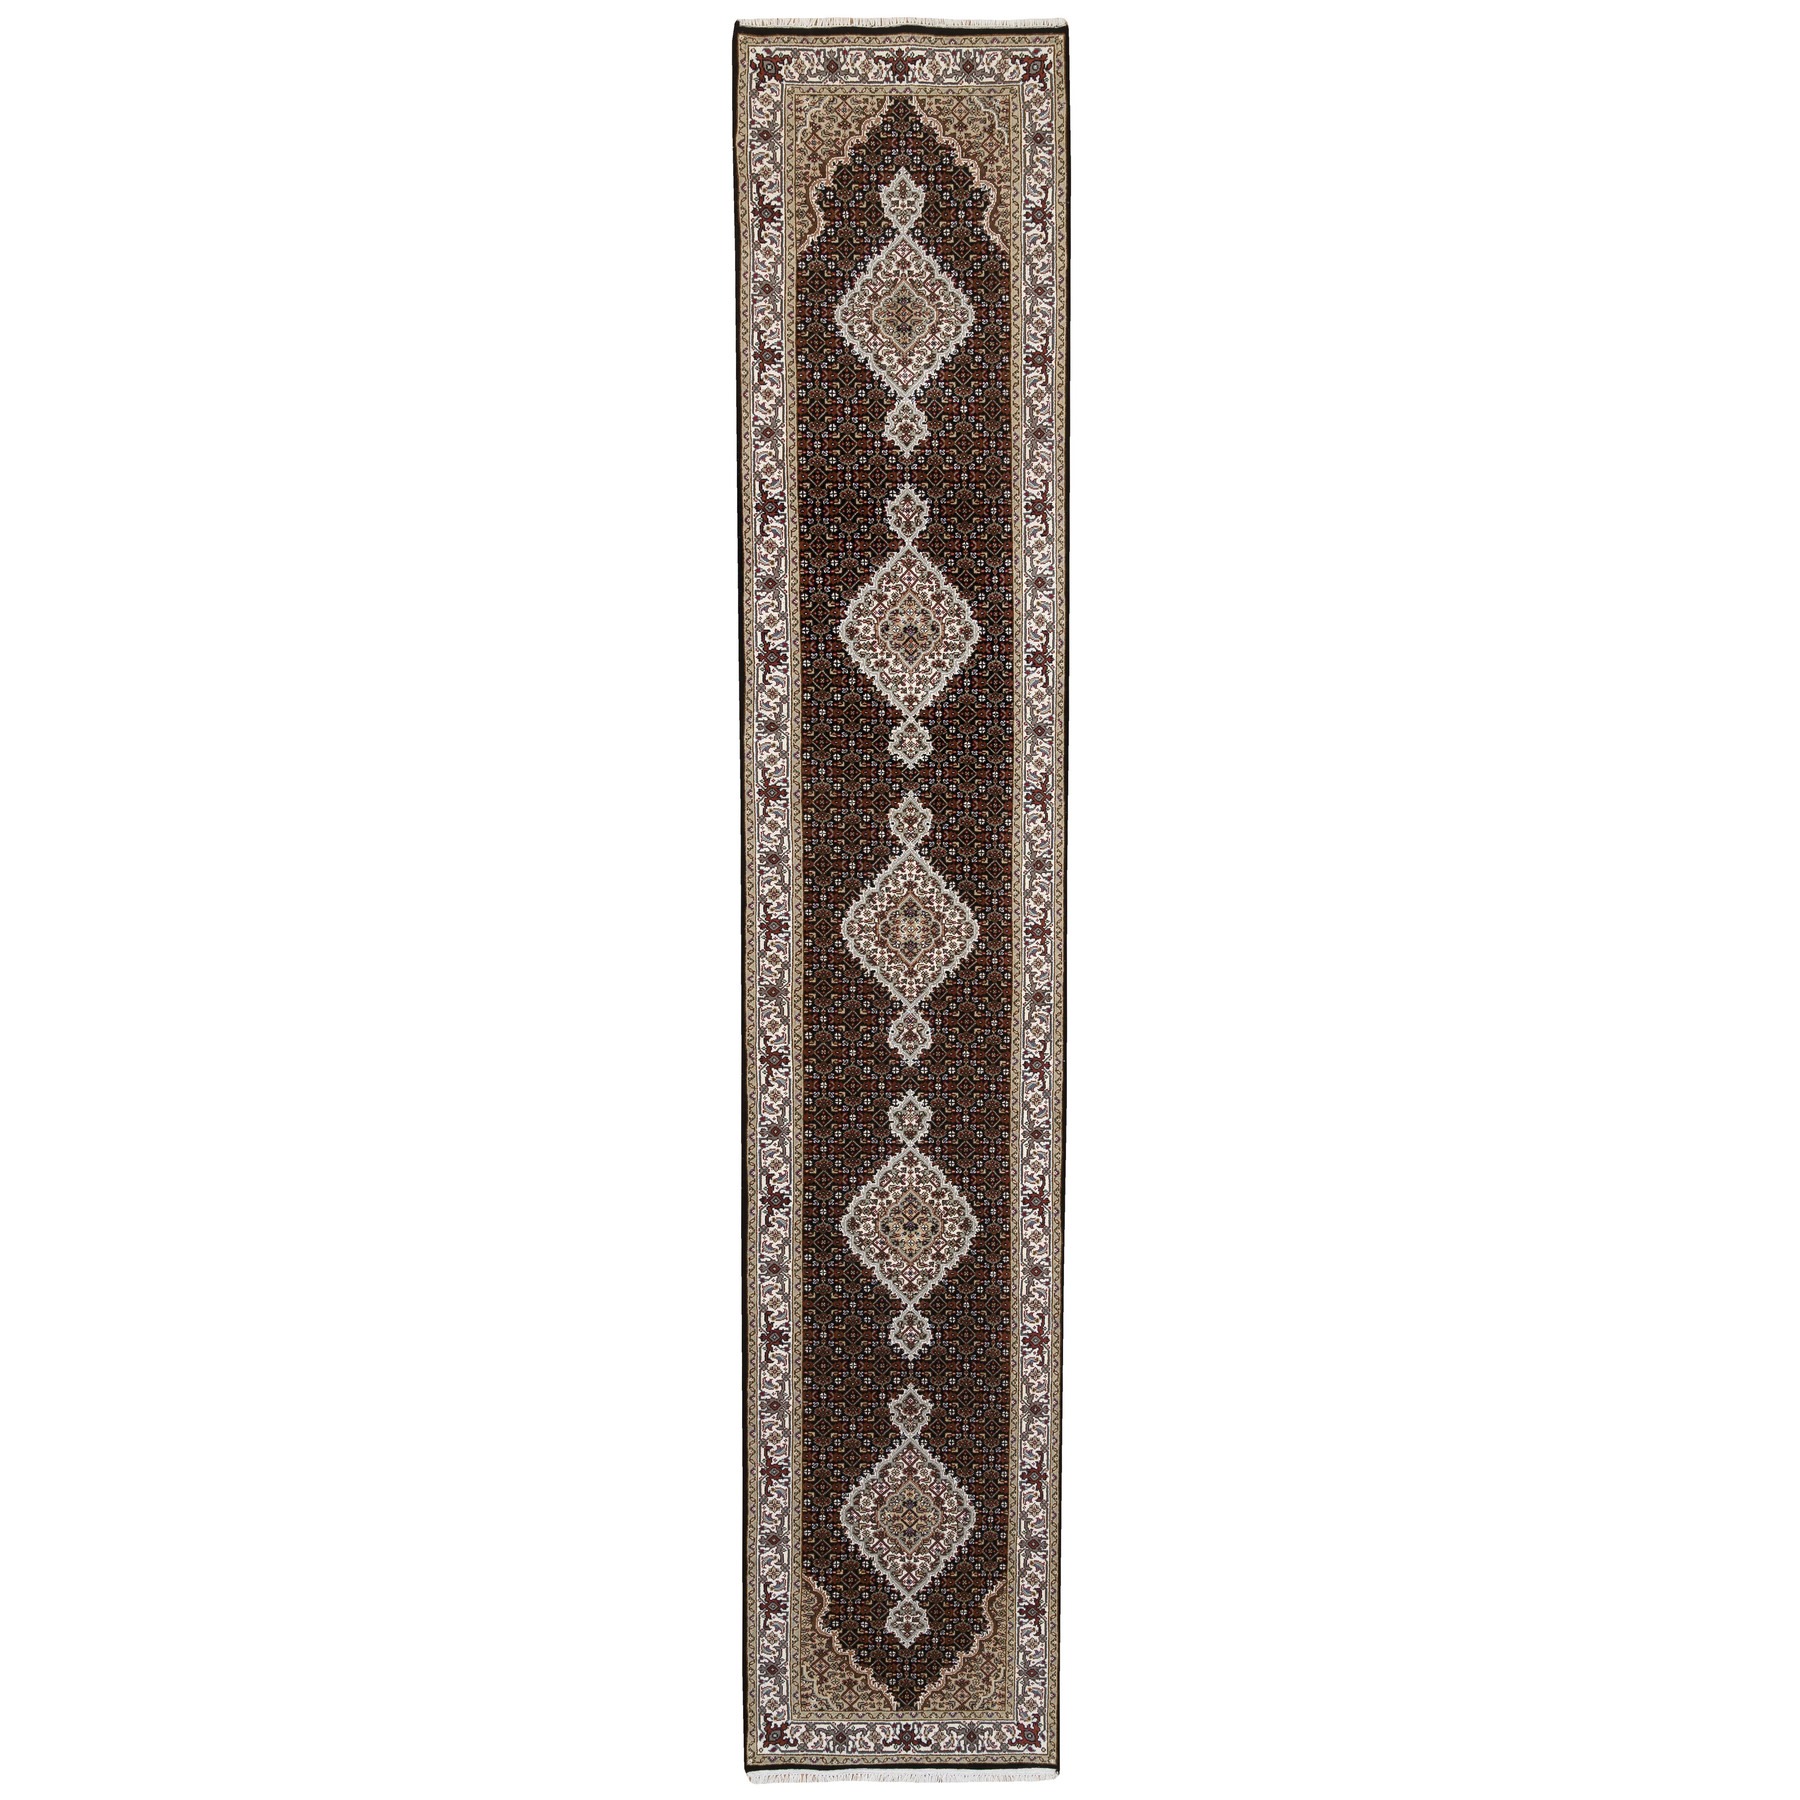 2'7"x14'2" 175 KPSI Hand Woven Rich Black Tabriz Mahi with Fish Medallions Design Wool and Silk Oriental Runner Rug 